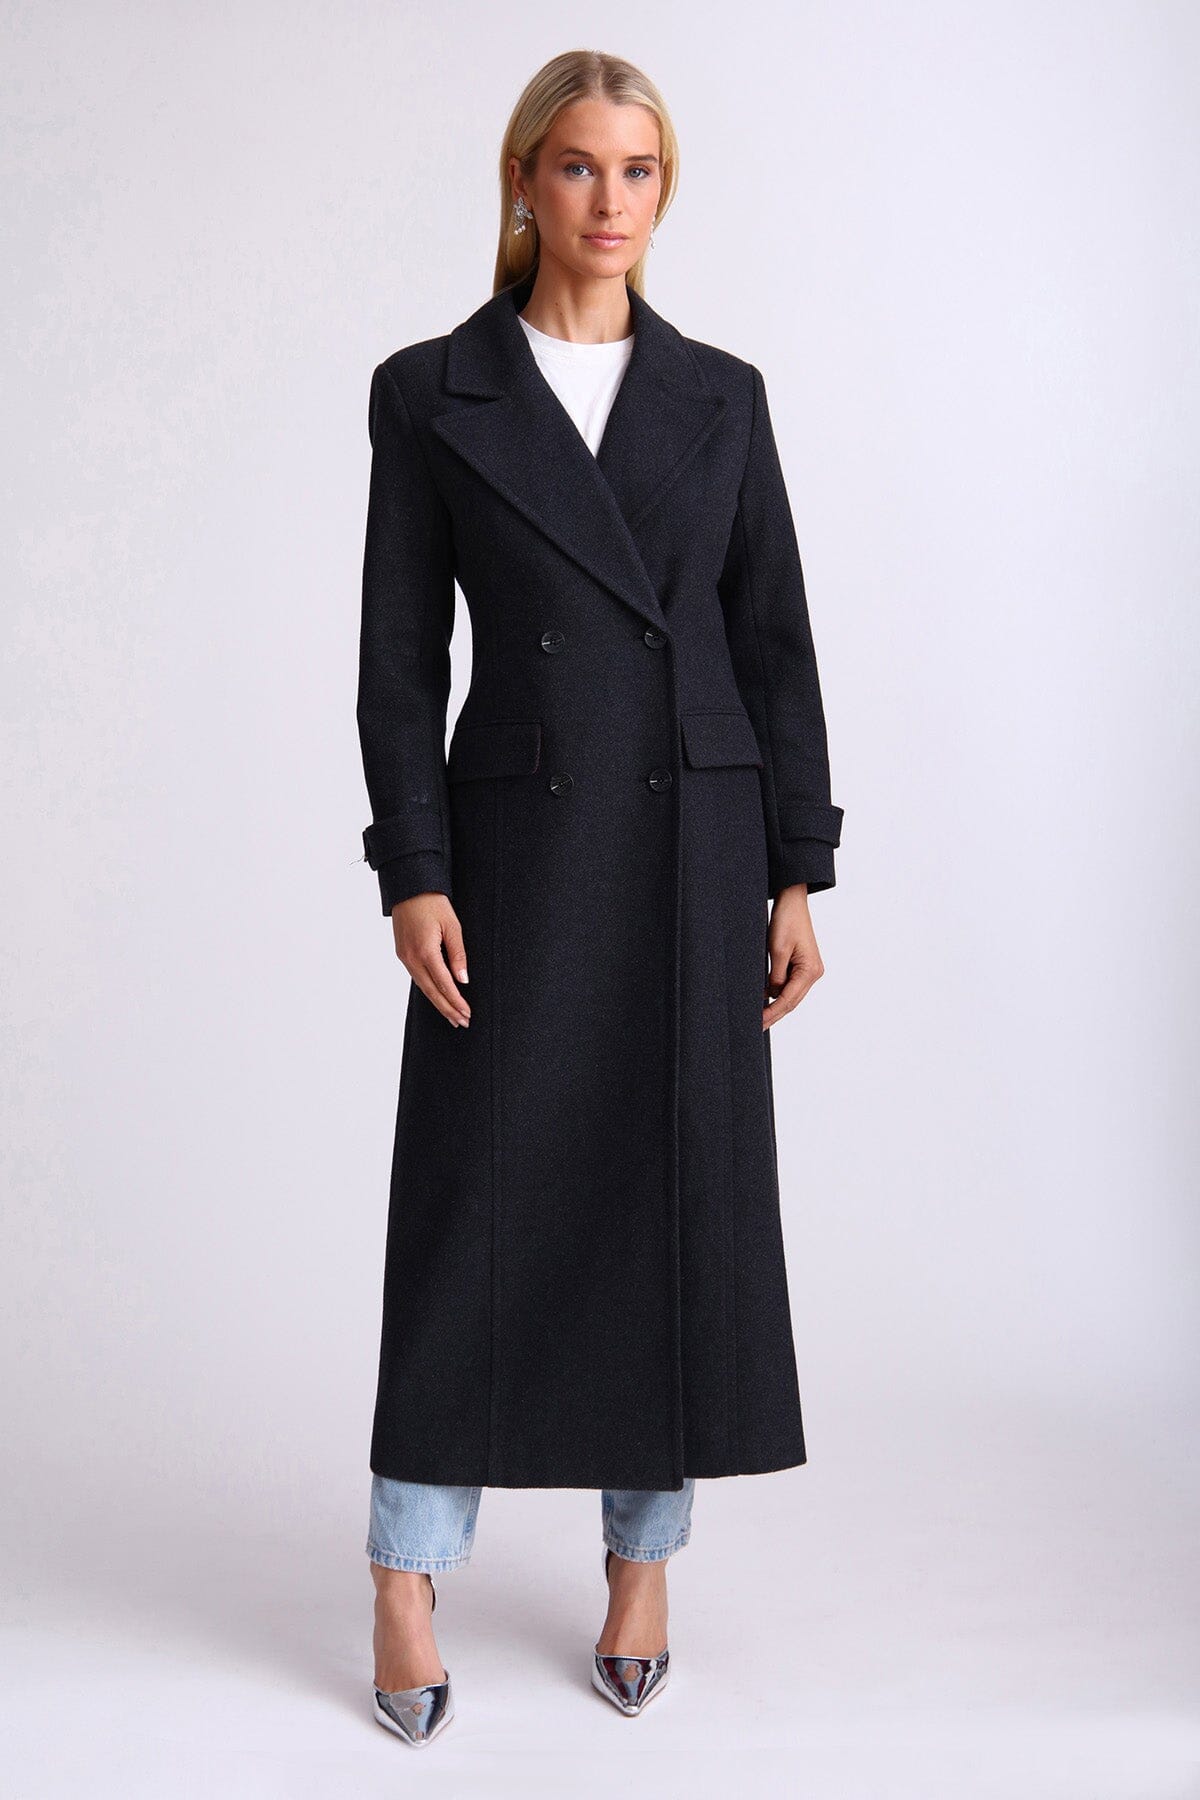 Black strong shoulder tailored wool blend long coat - women's figure flattering fall date night coats outerwear